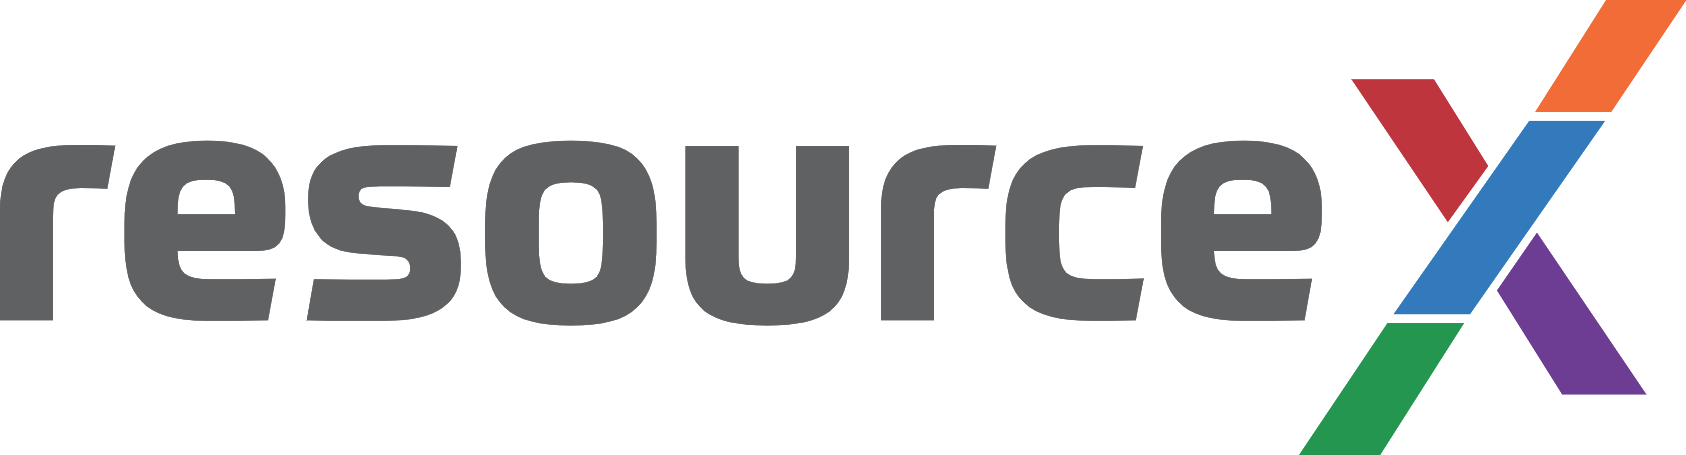 resource exploration logo